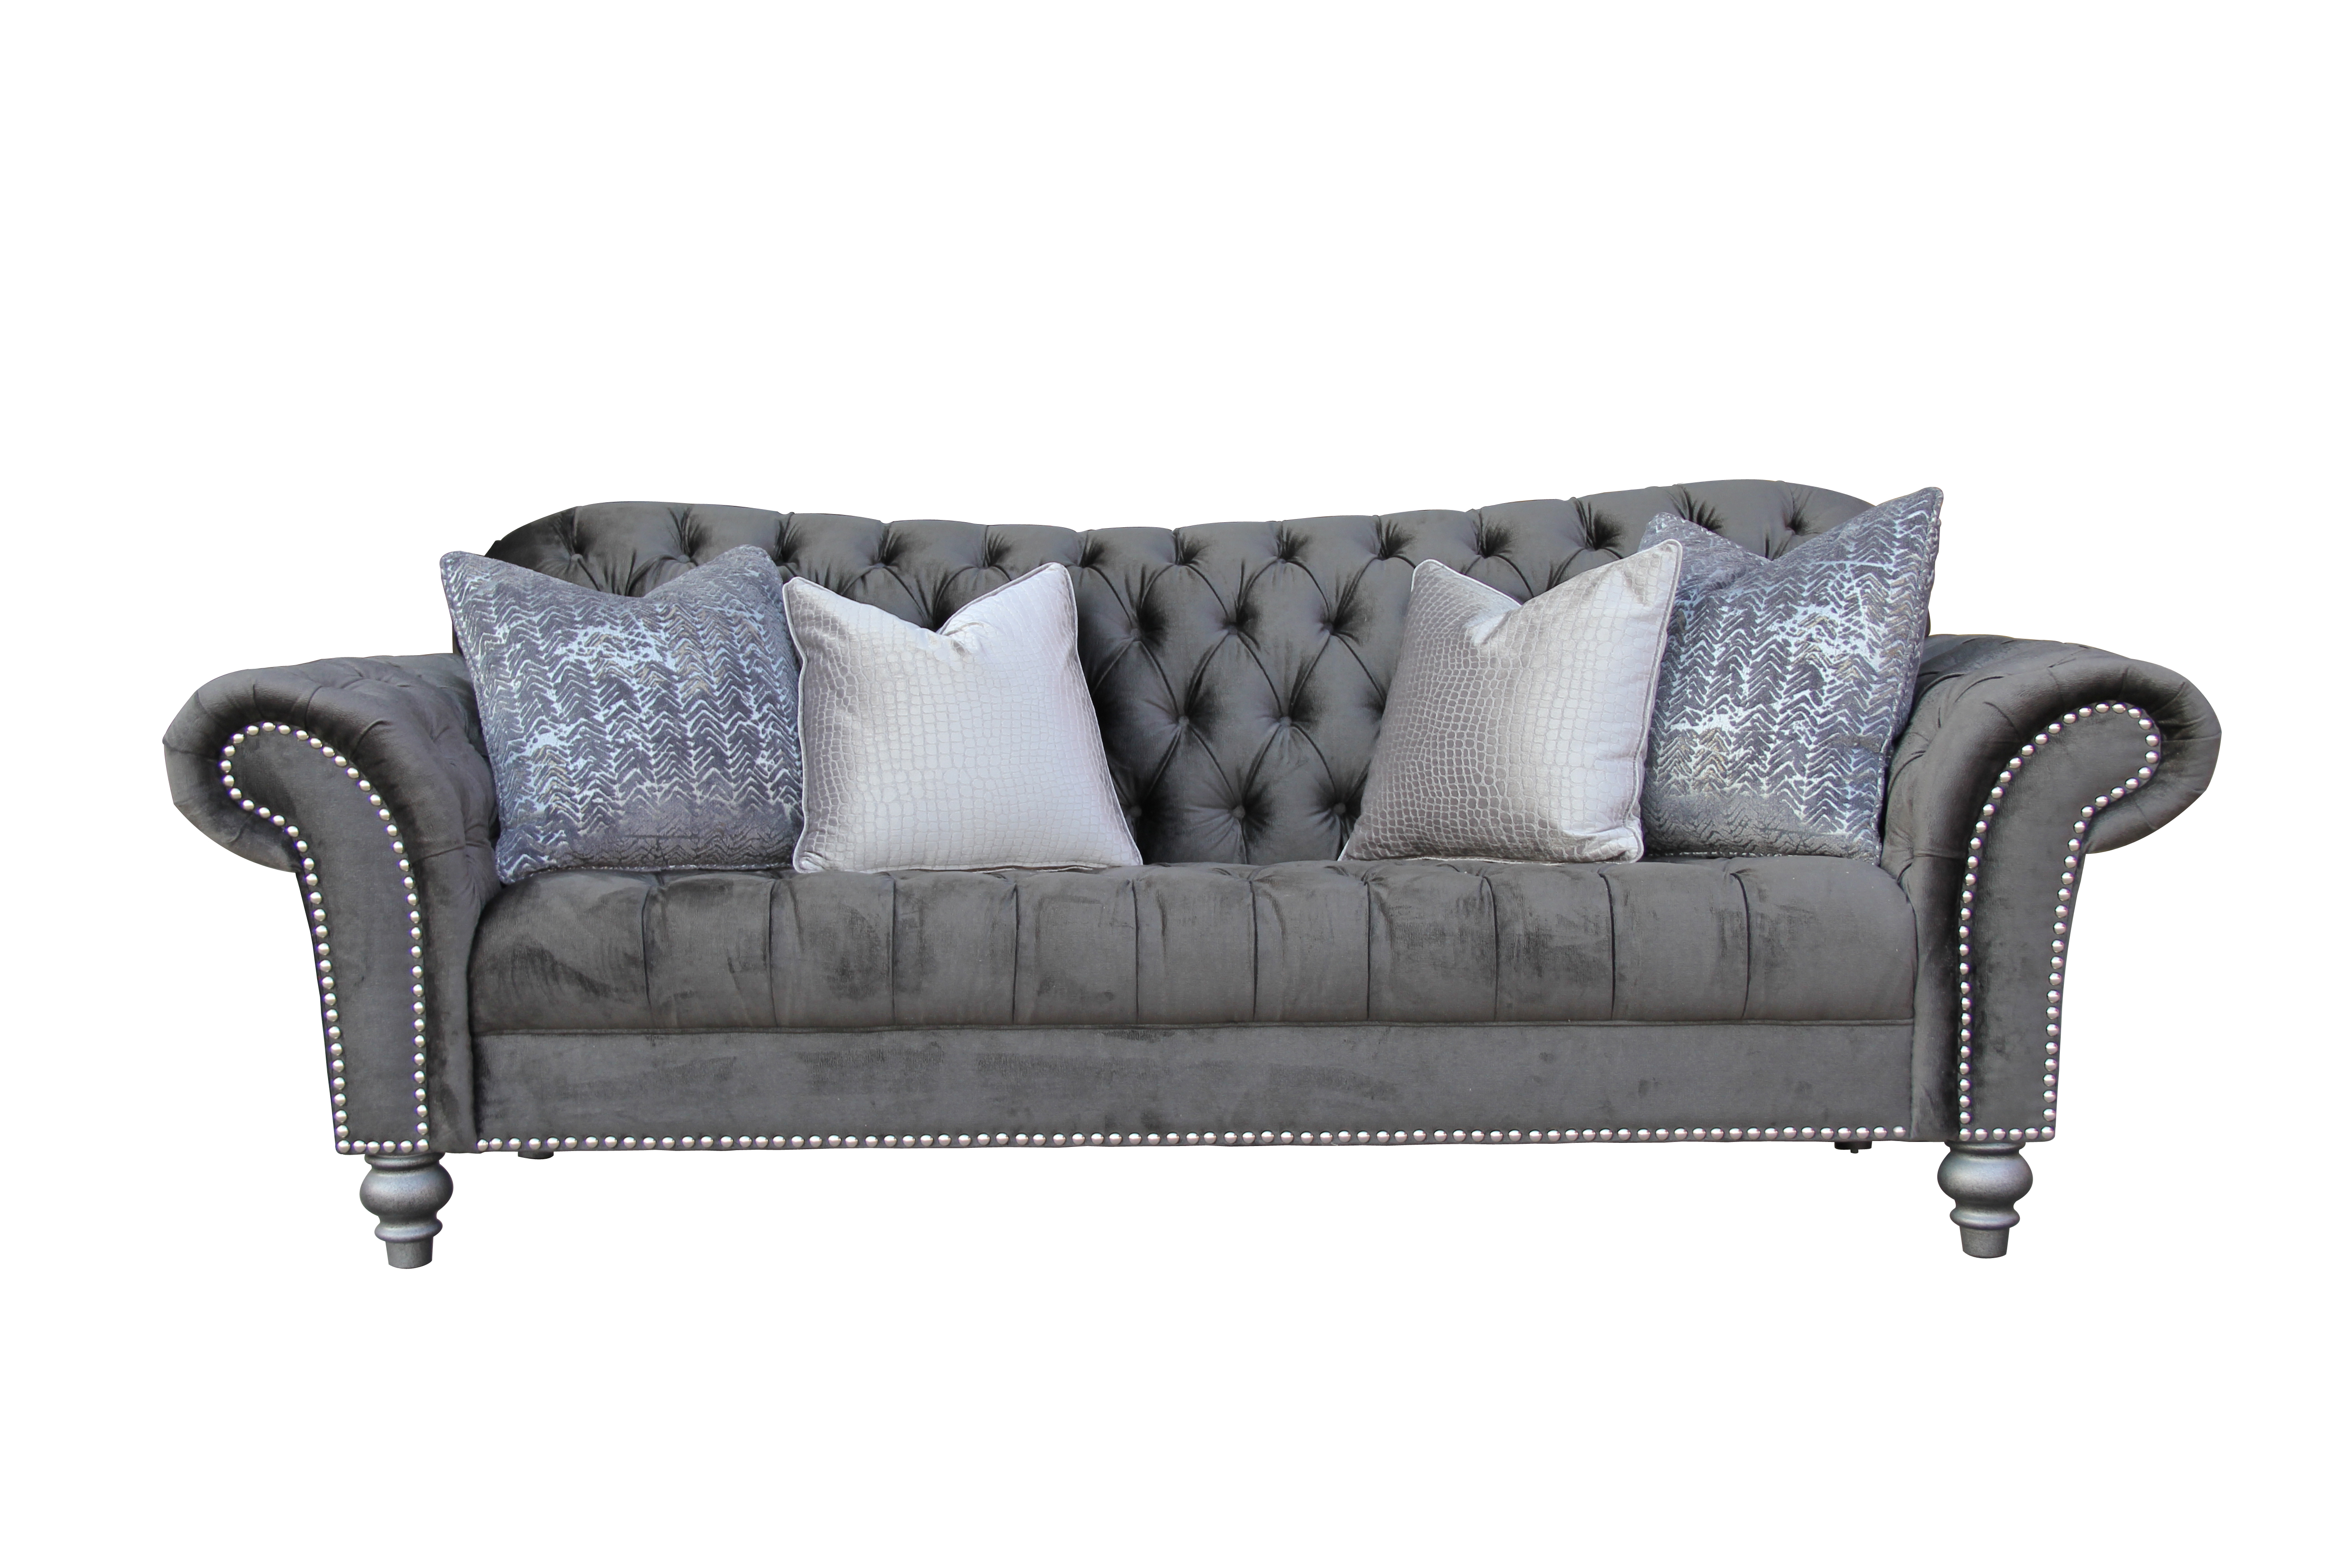 HS-198 Lourna Charcoal Sofa